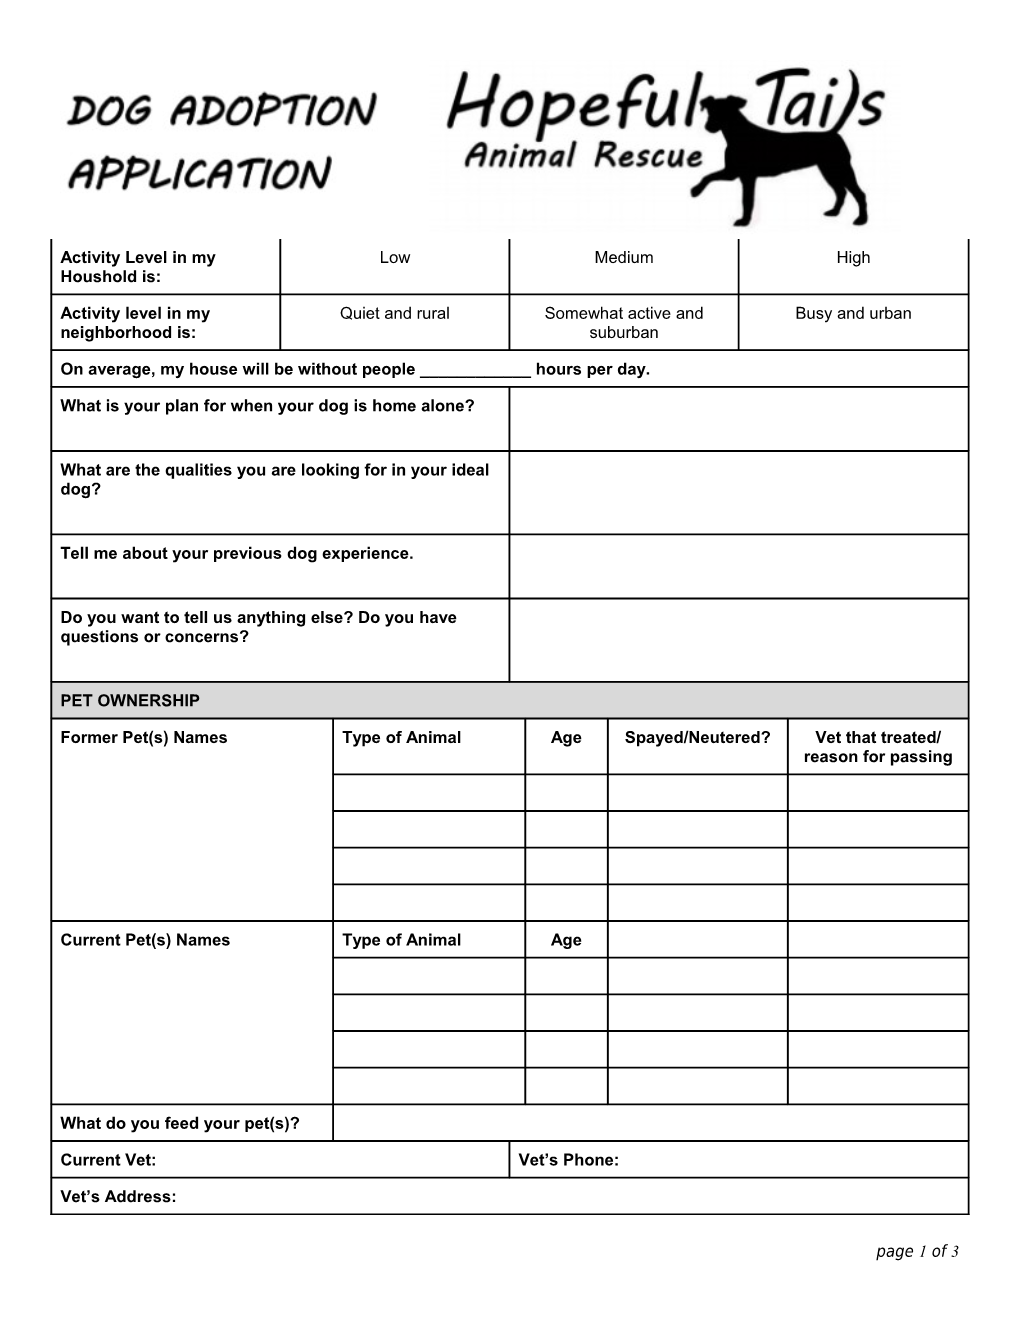 Hopeful Tails Adoption Applicationpage1 of 3